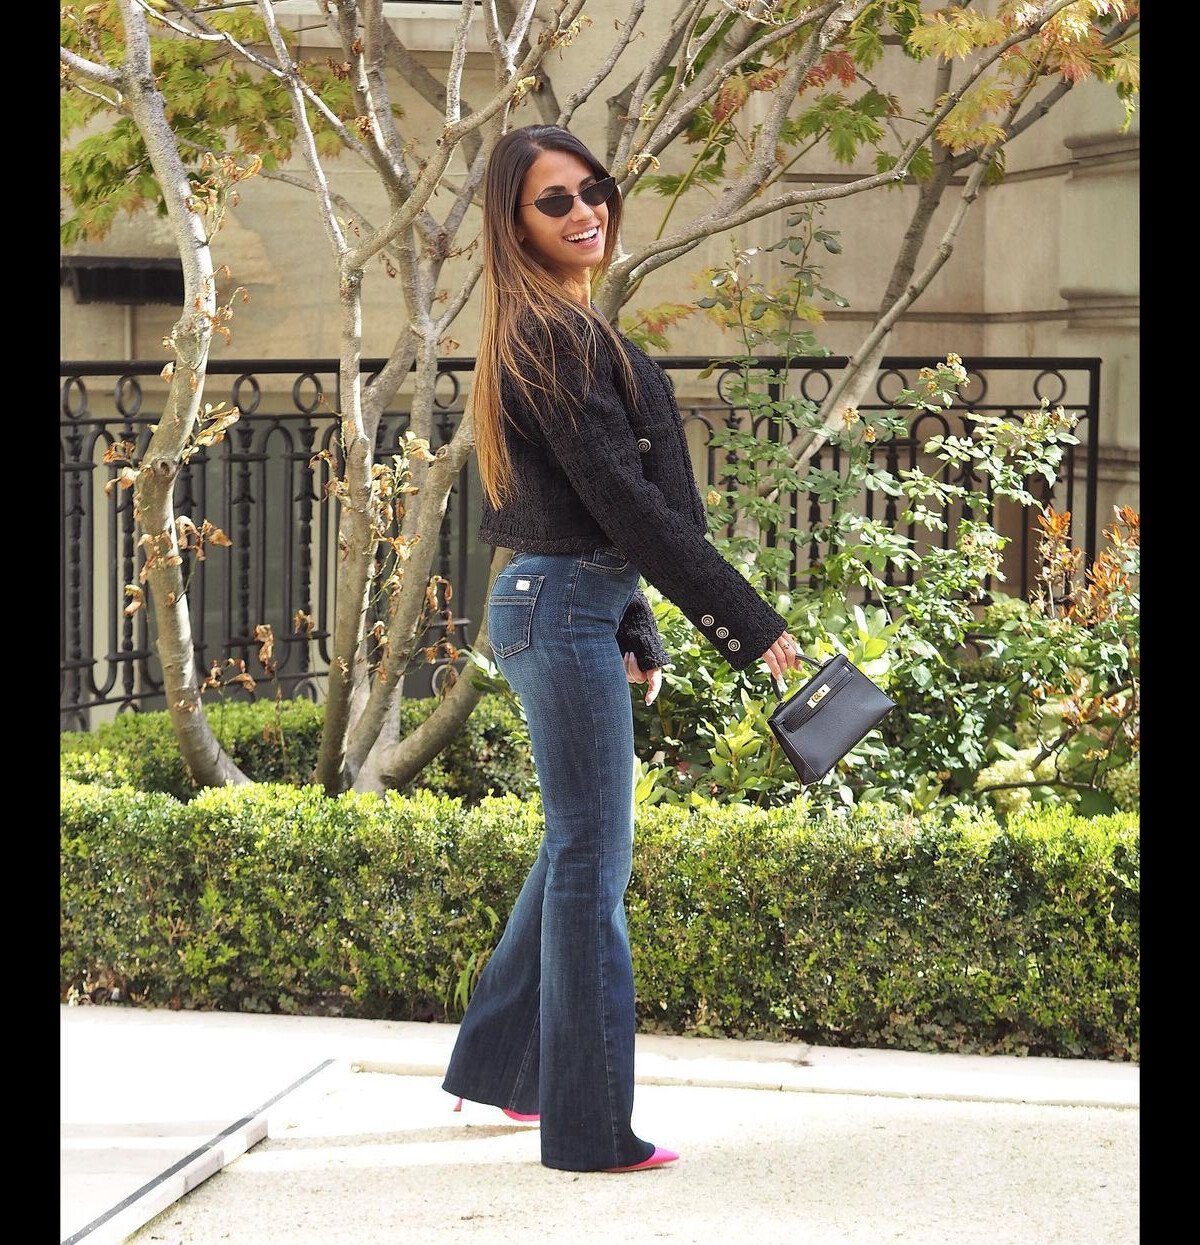 https://static1.purepeople.com.br/articles/8/36/90/08/@/4231217-look-elegante-com-jeans-foi-aposta-de-an-1200x0-2.jpg